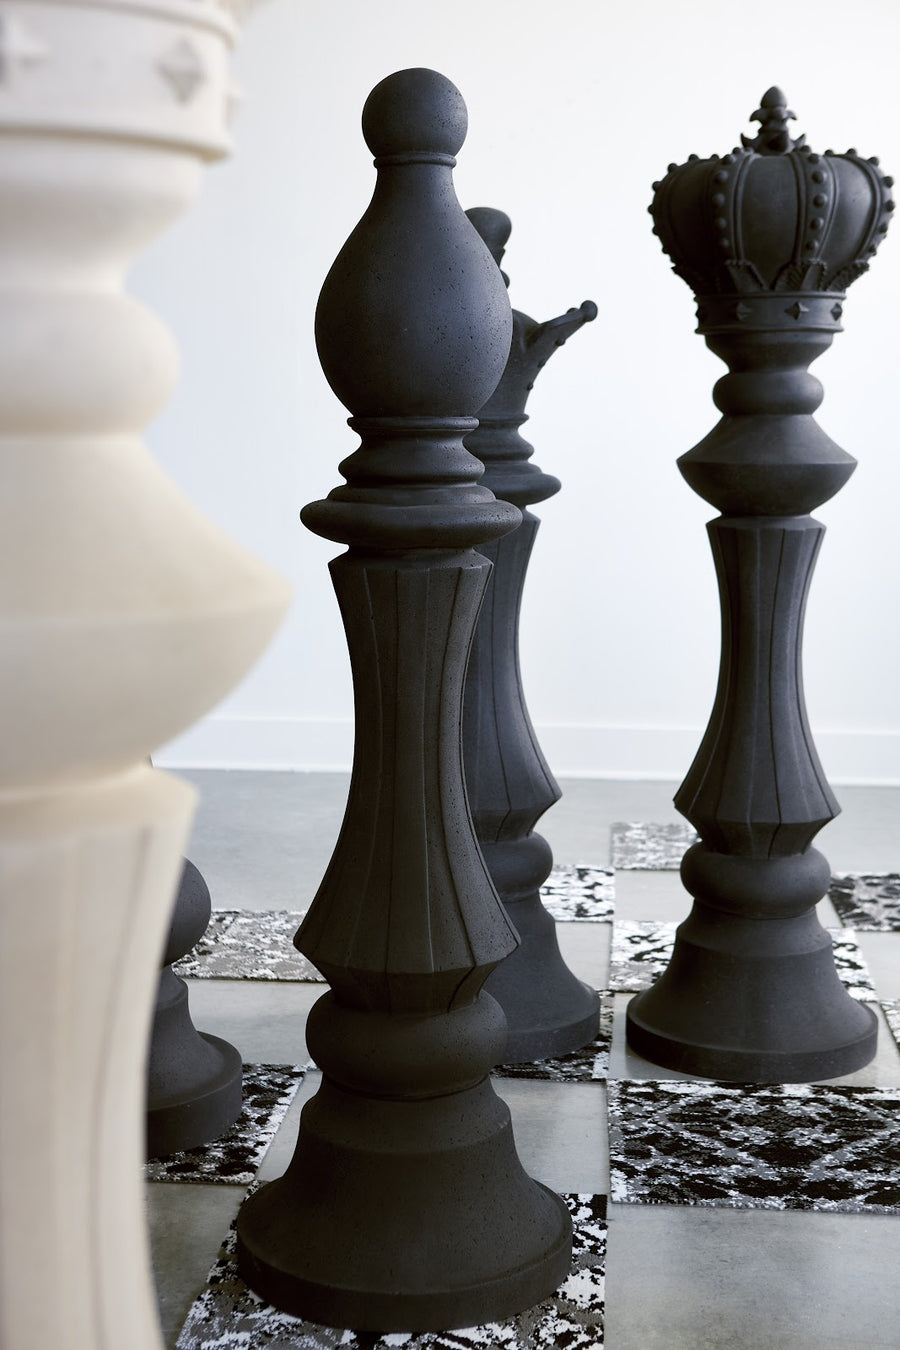 Pawn Chess Sculpture, Cast Stone White